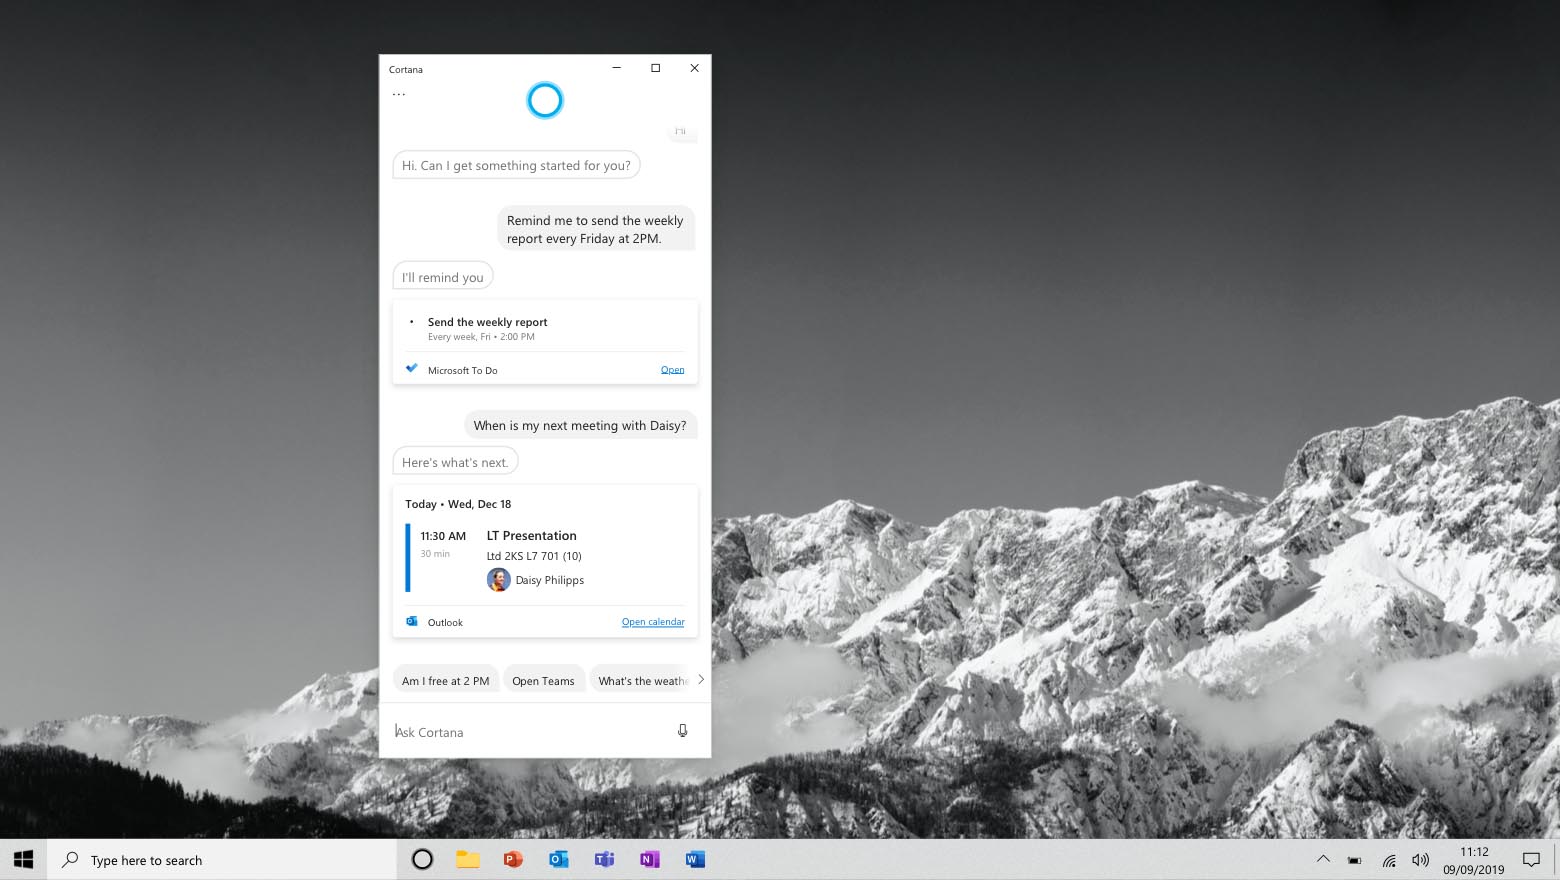 La interacción de Cortana con un usuario para establecer un recordatorio de reunión